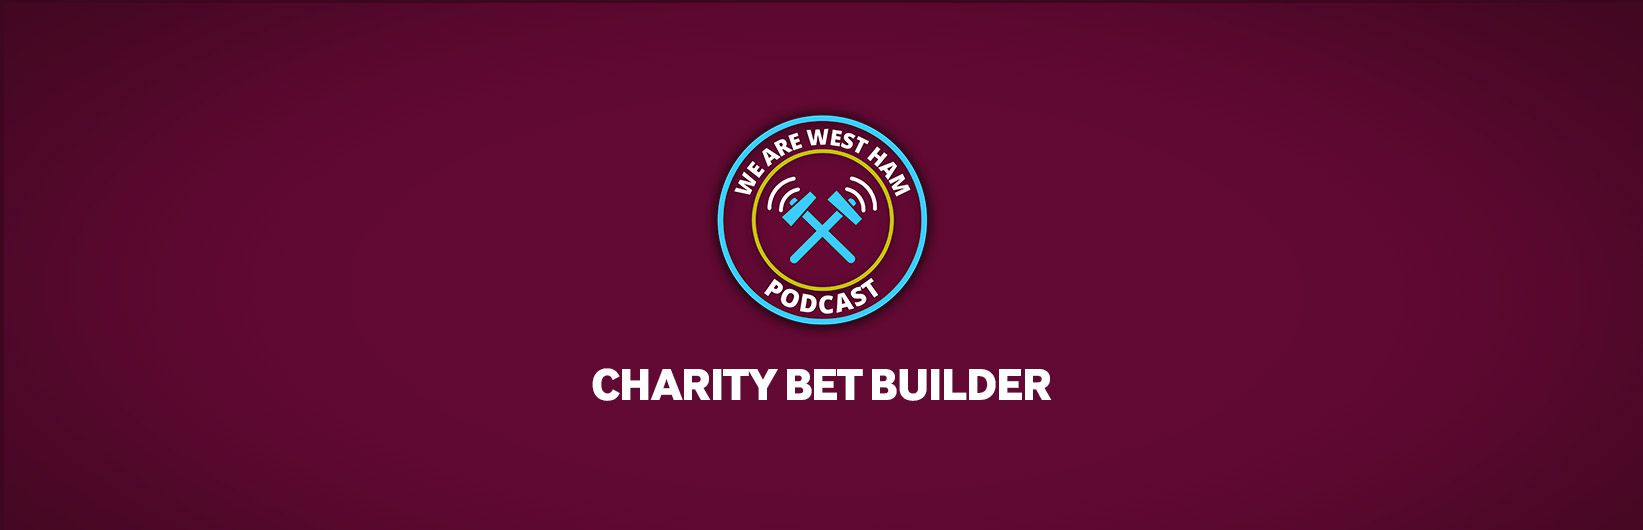 Charity bet builder for Aston Villa v West Ham